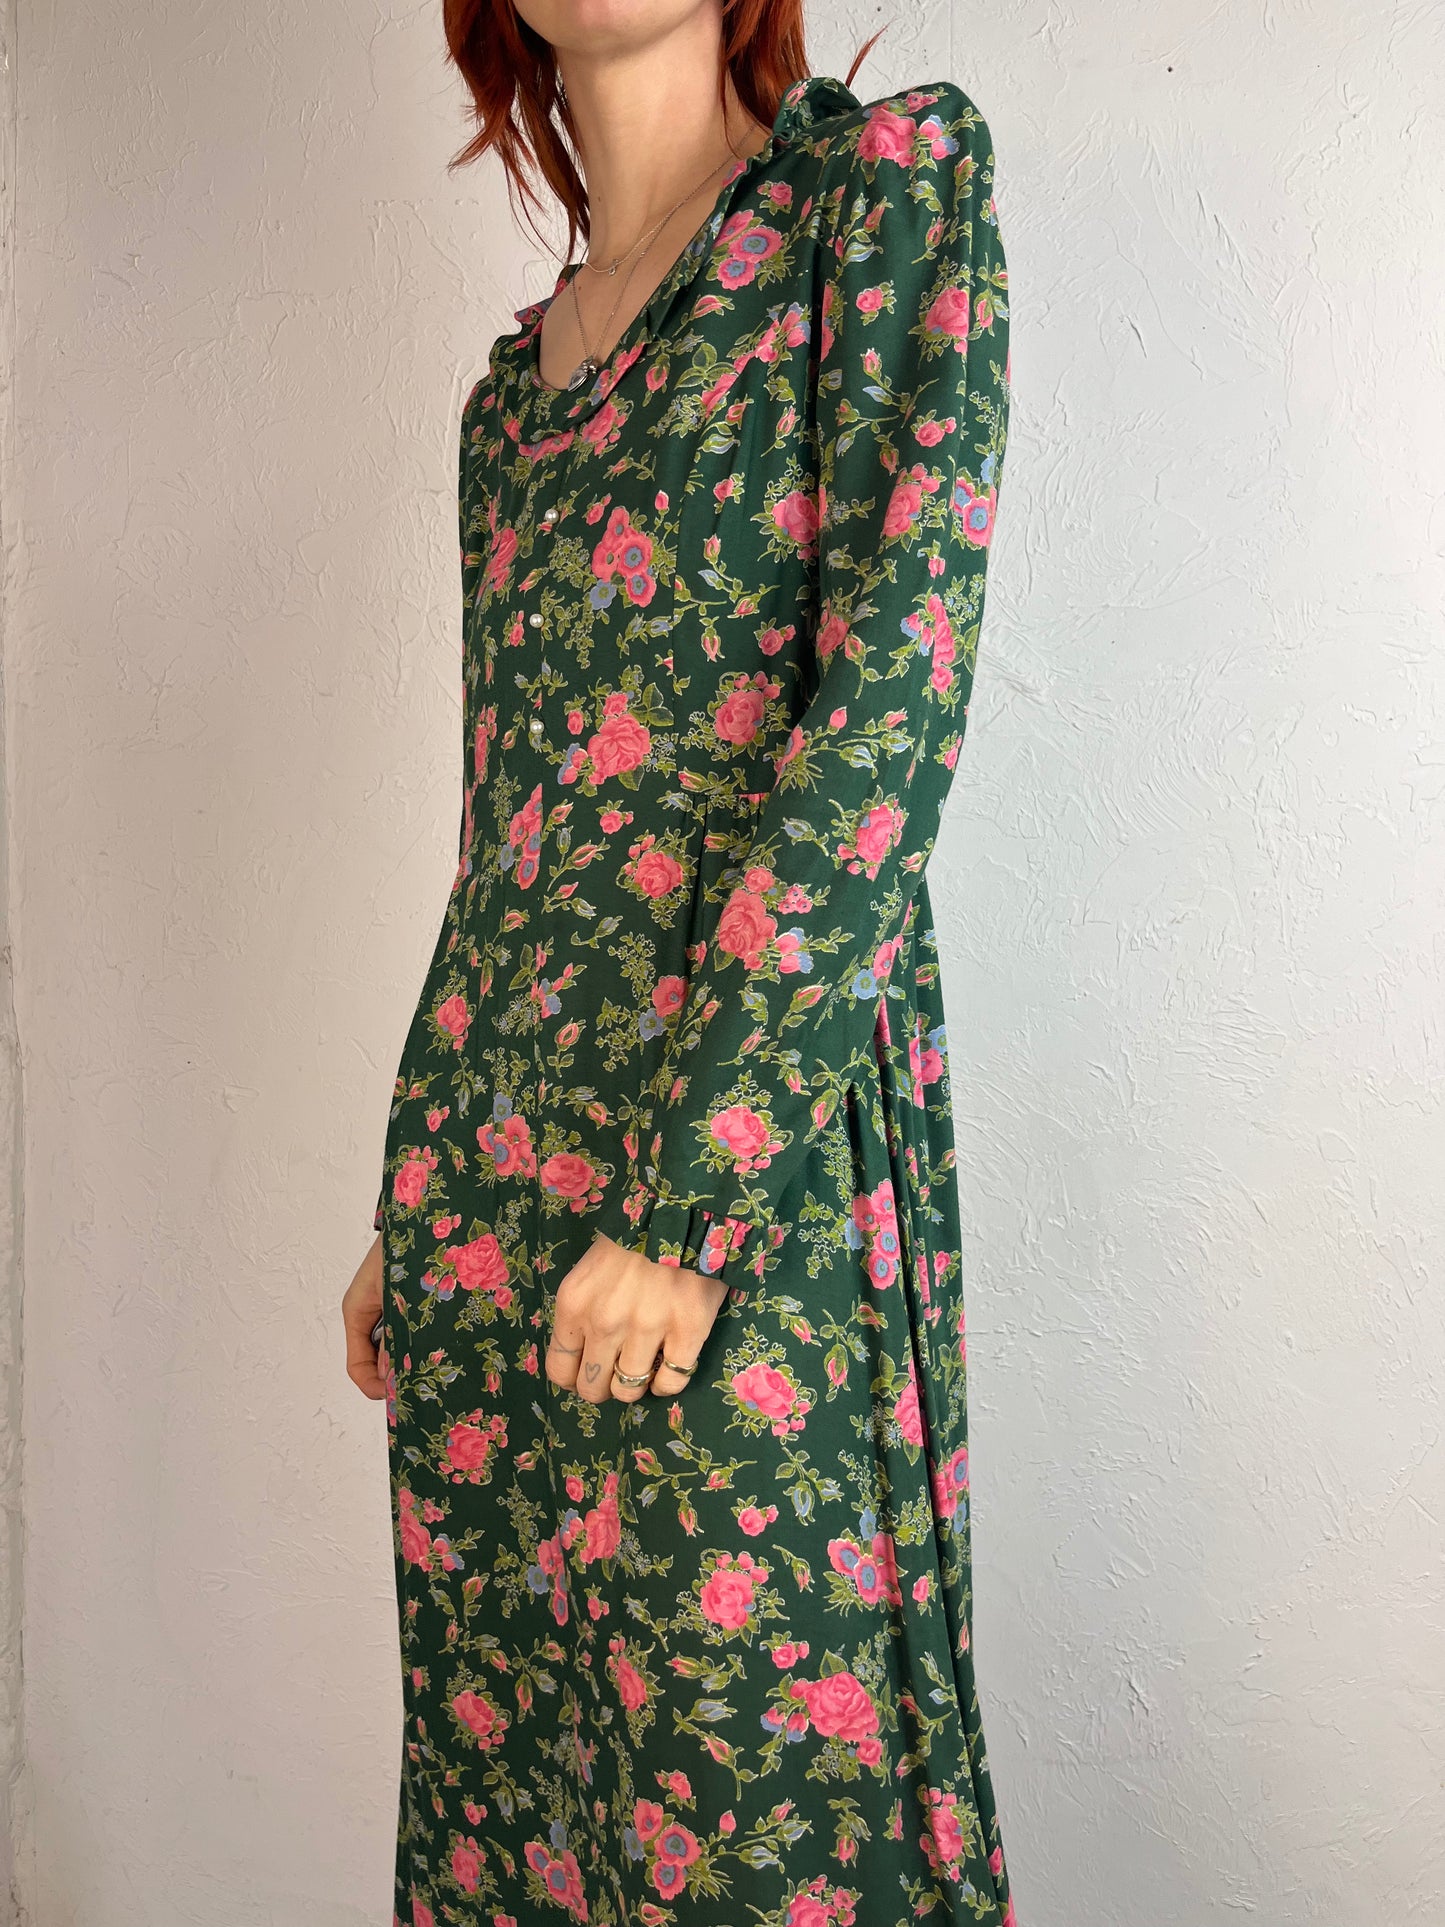 80s Green Floral Print Cottage Core Prairie Dress / Small - Medium